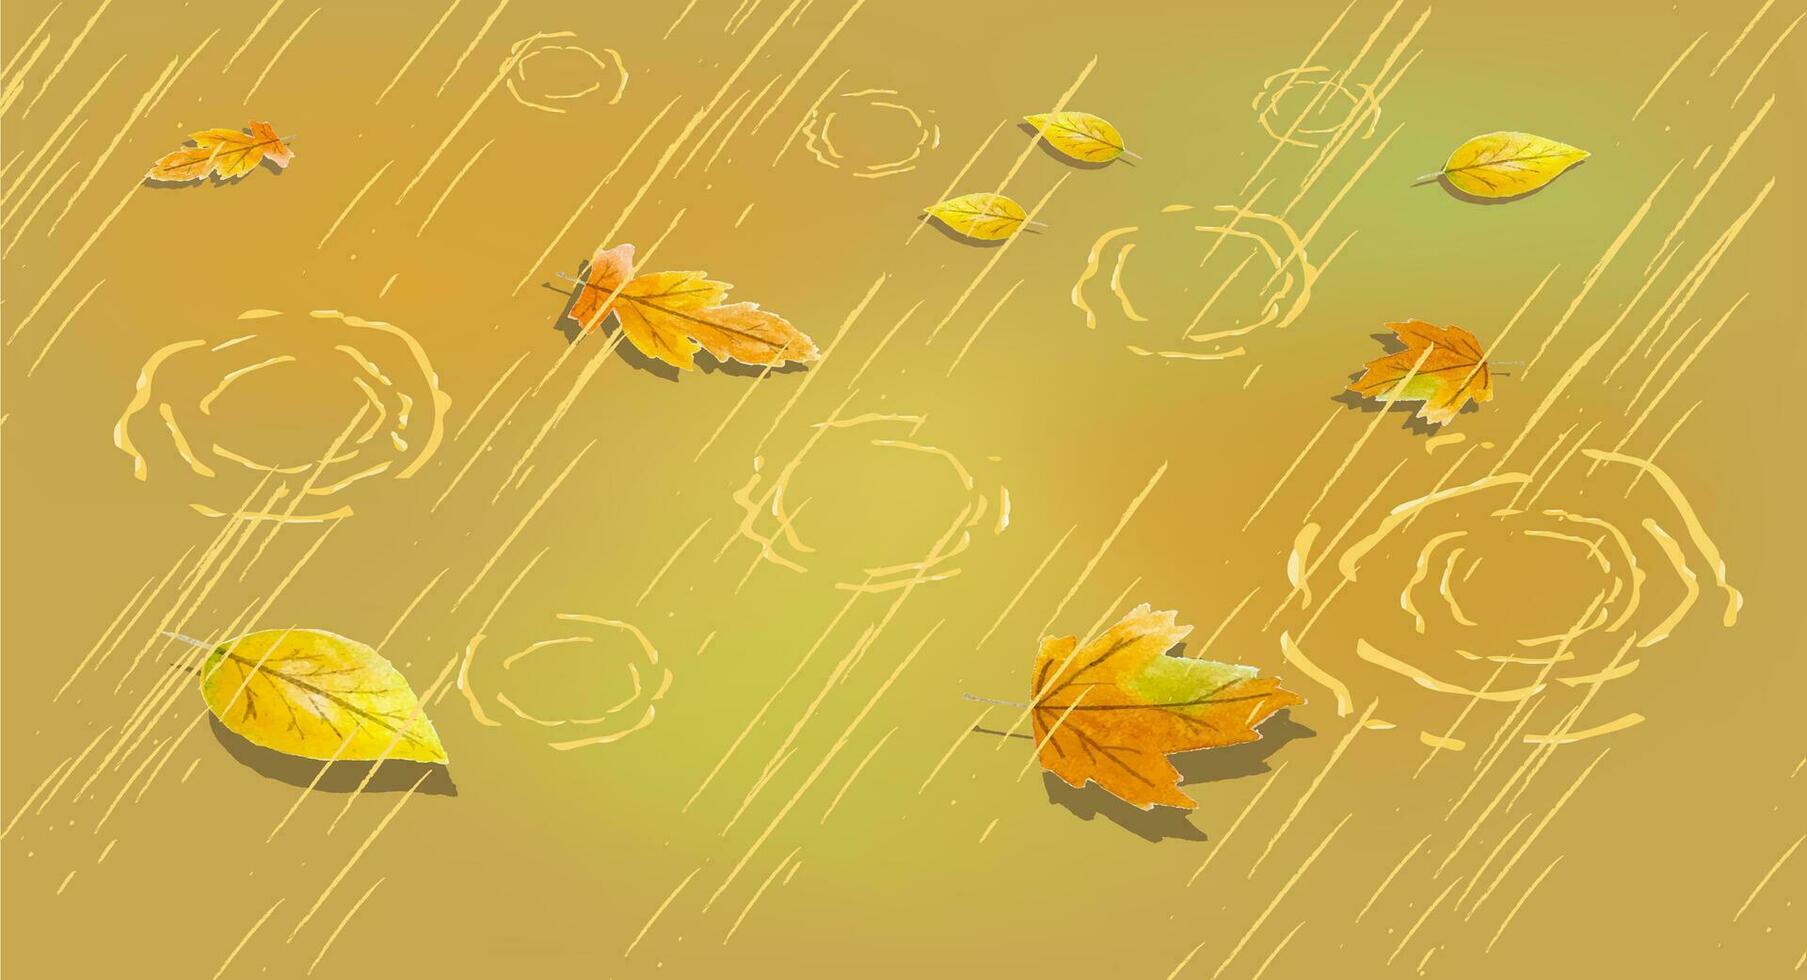 otoño charco gotas lluvia hojas. hermosa fondos de pantalla para pancartas, carteles en el otoño tema. atmosférico naturaleza vector